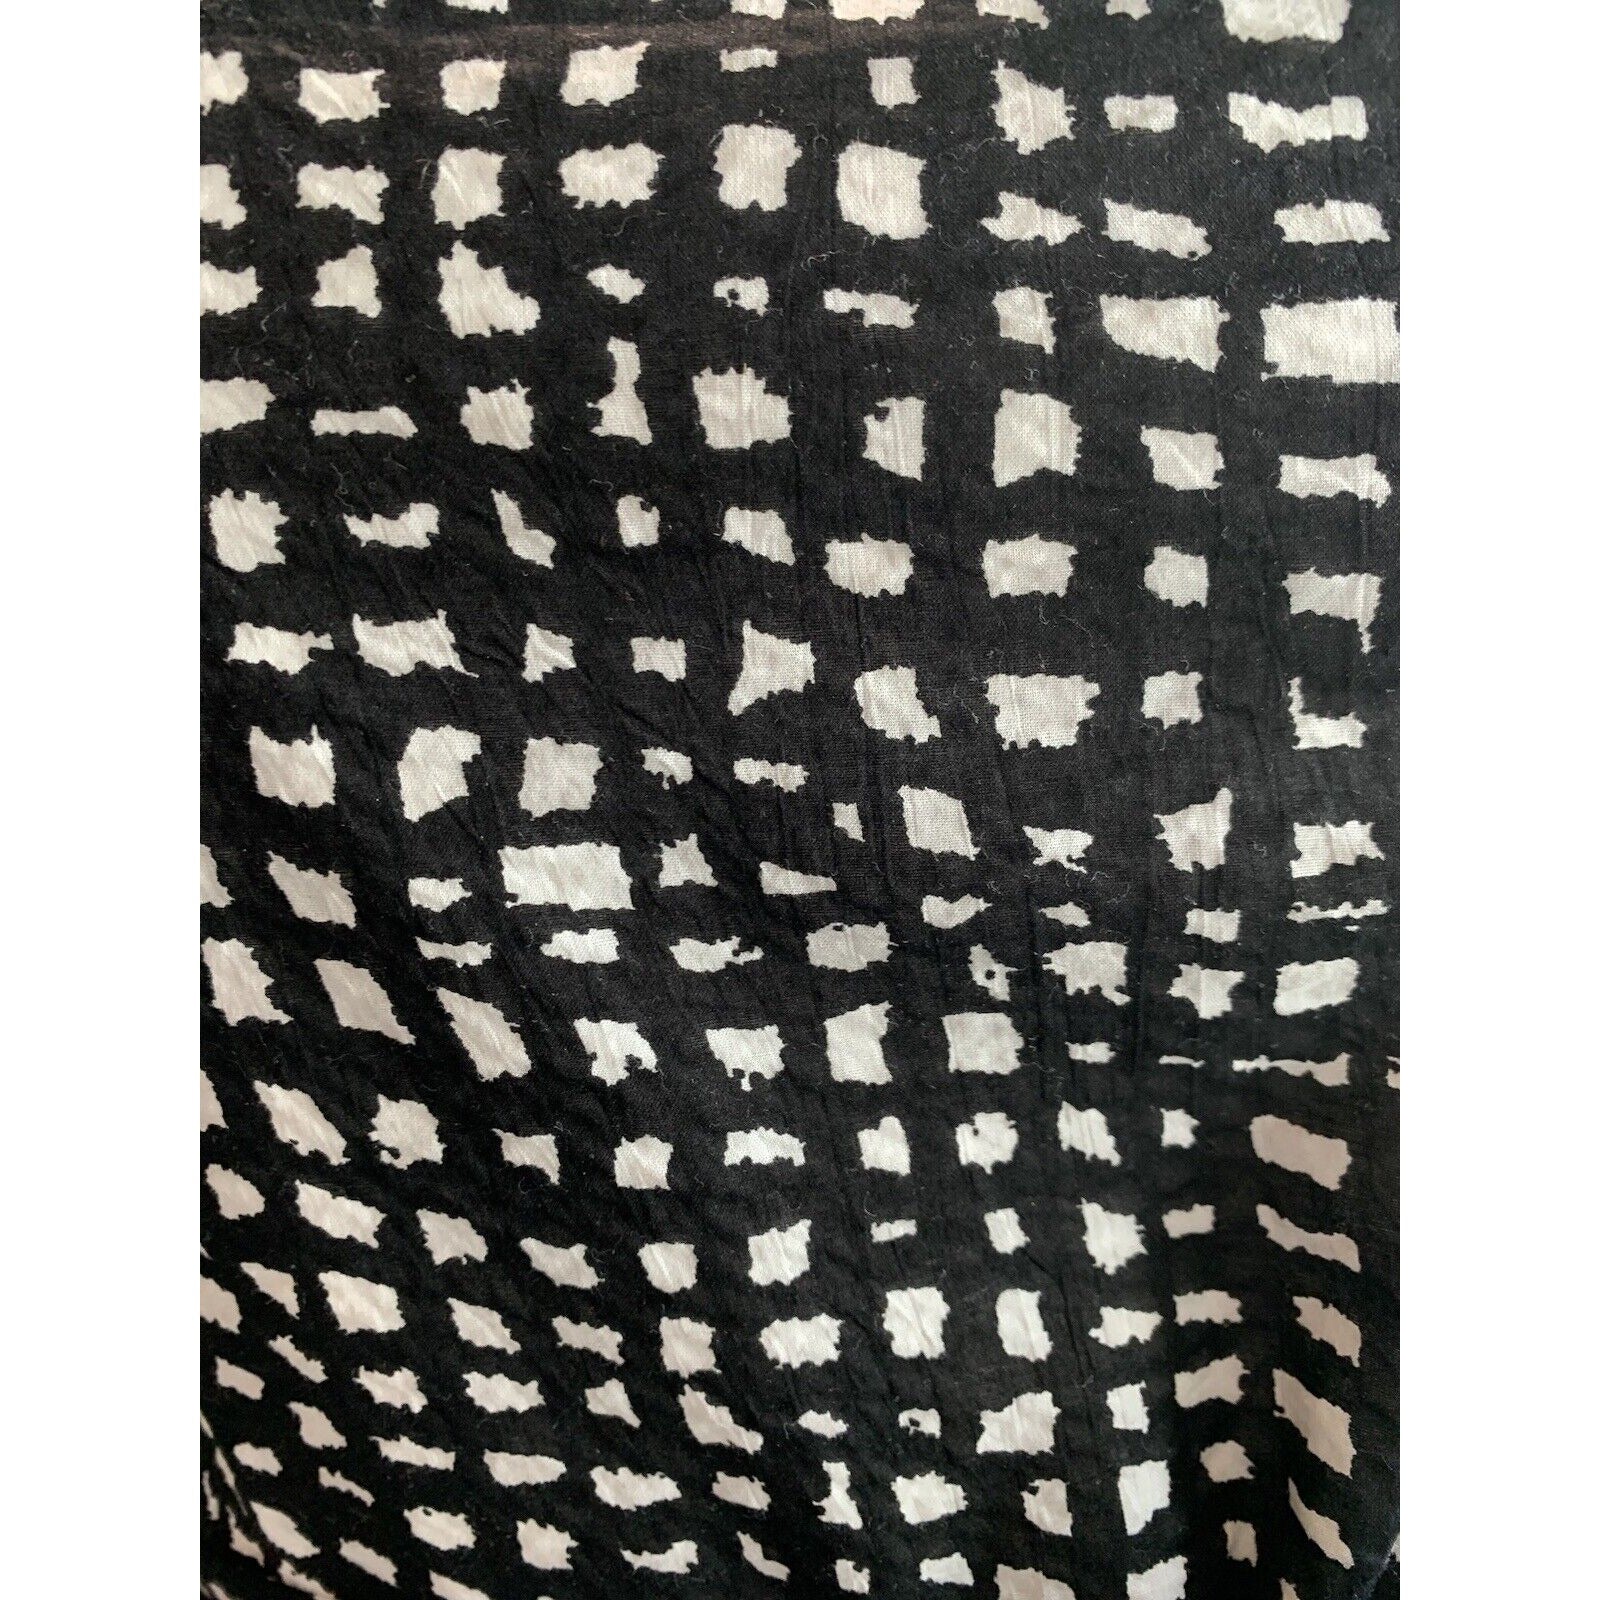 Closeup Of Black And White Print